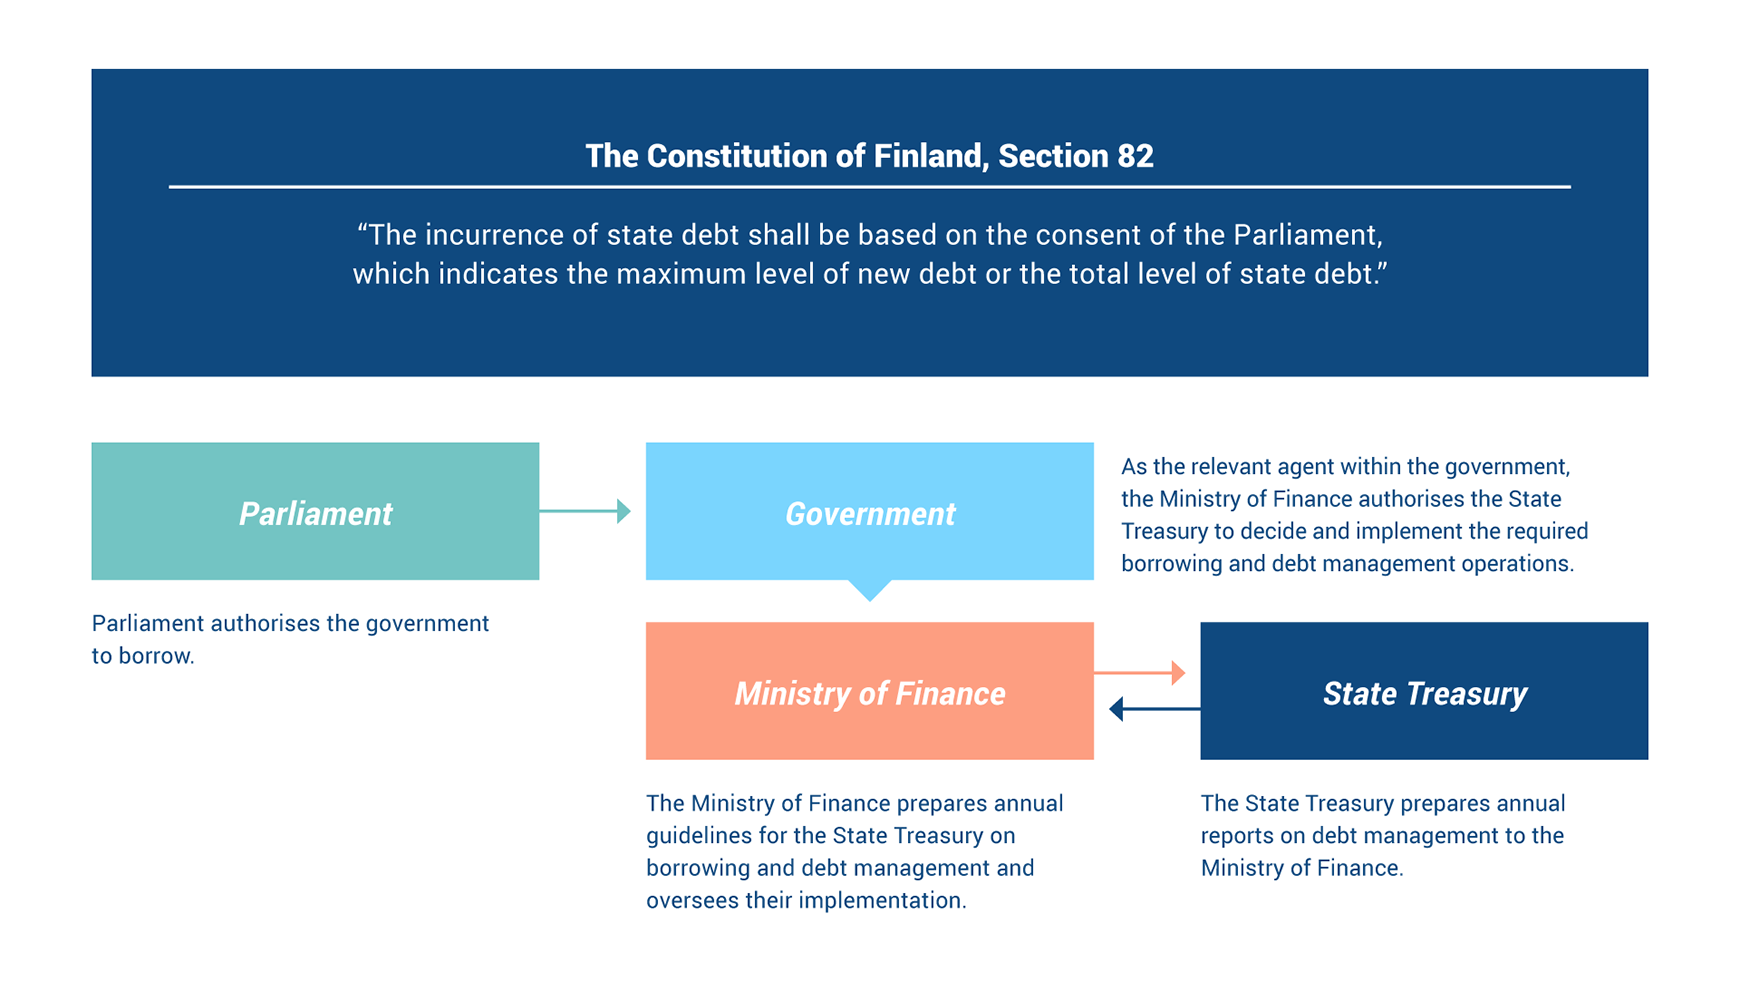 The image explains the debt management framework in Finland.